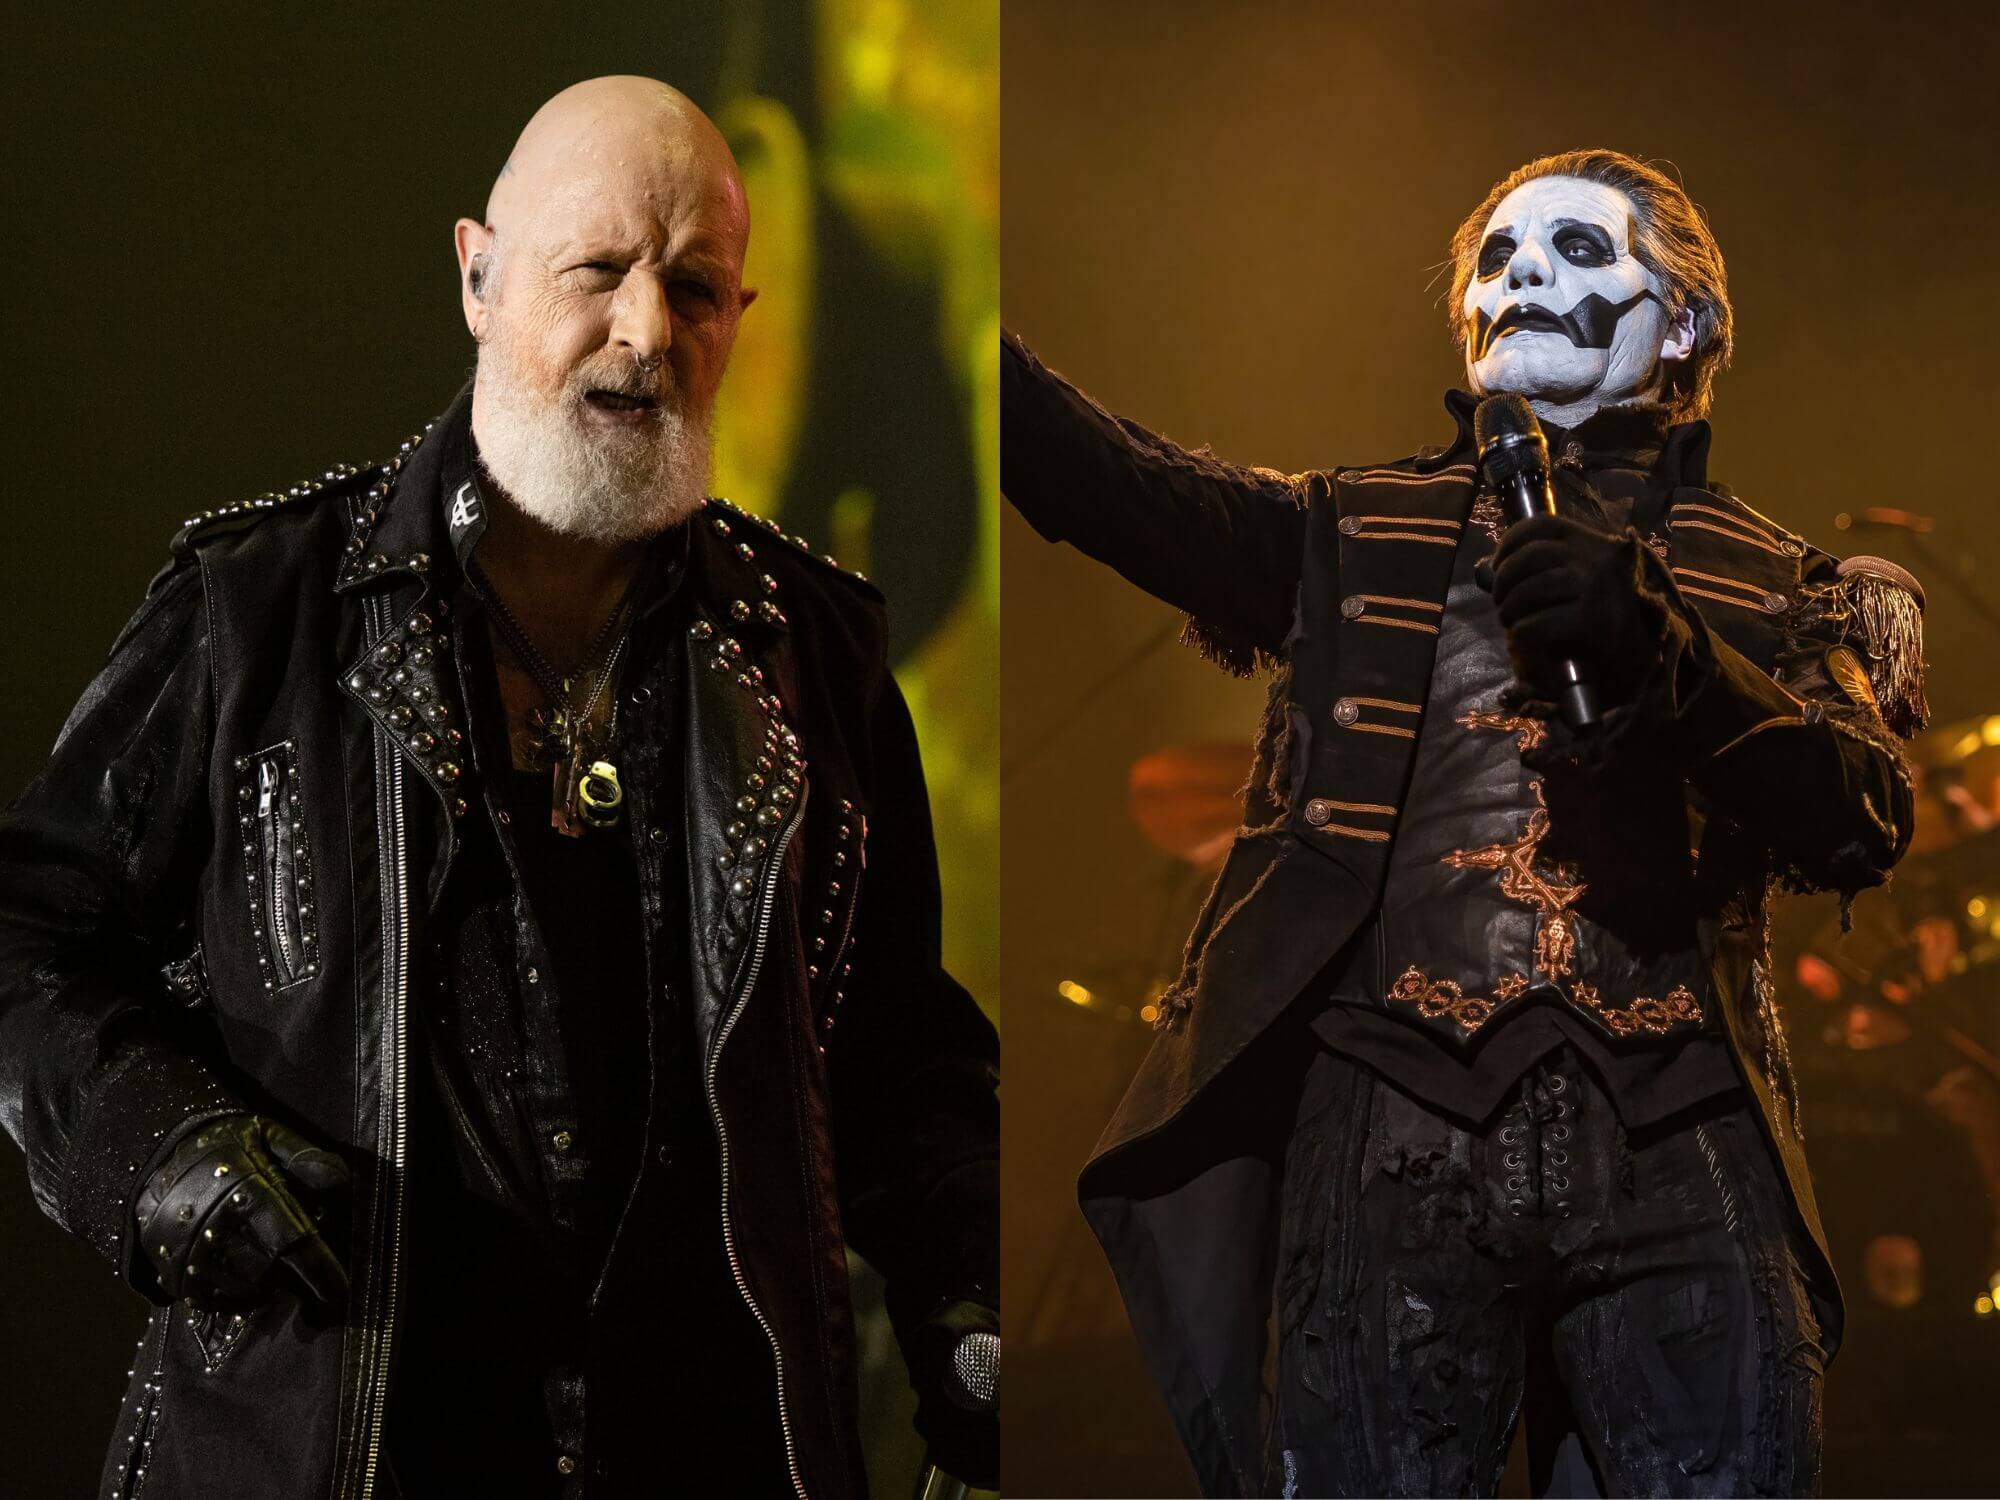 Judas Priest's Rob Halford on Ghost